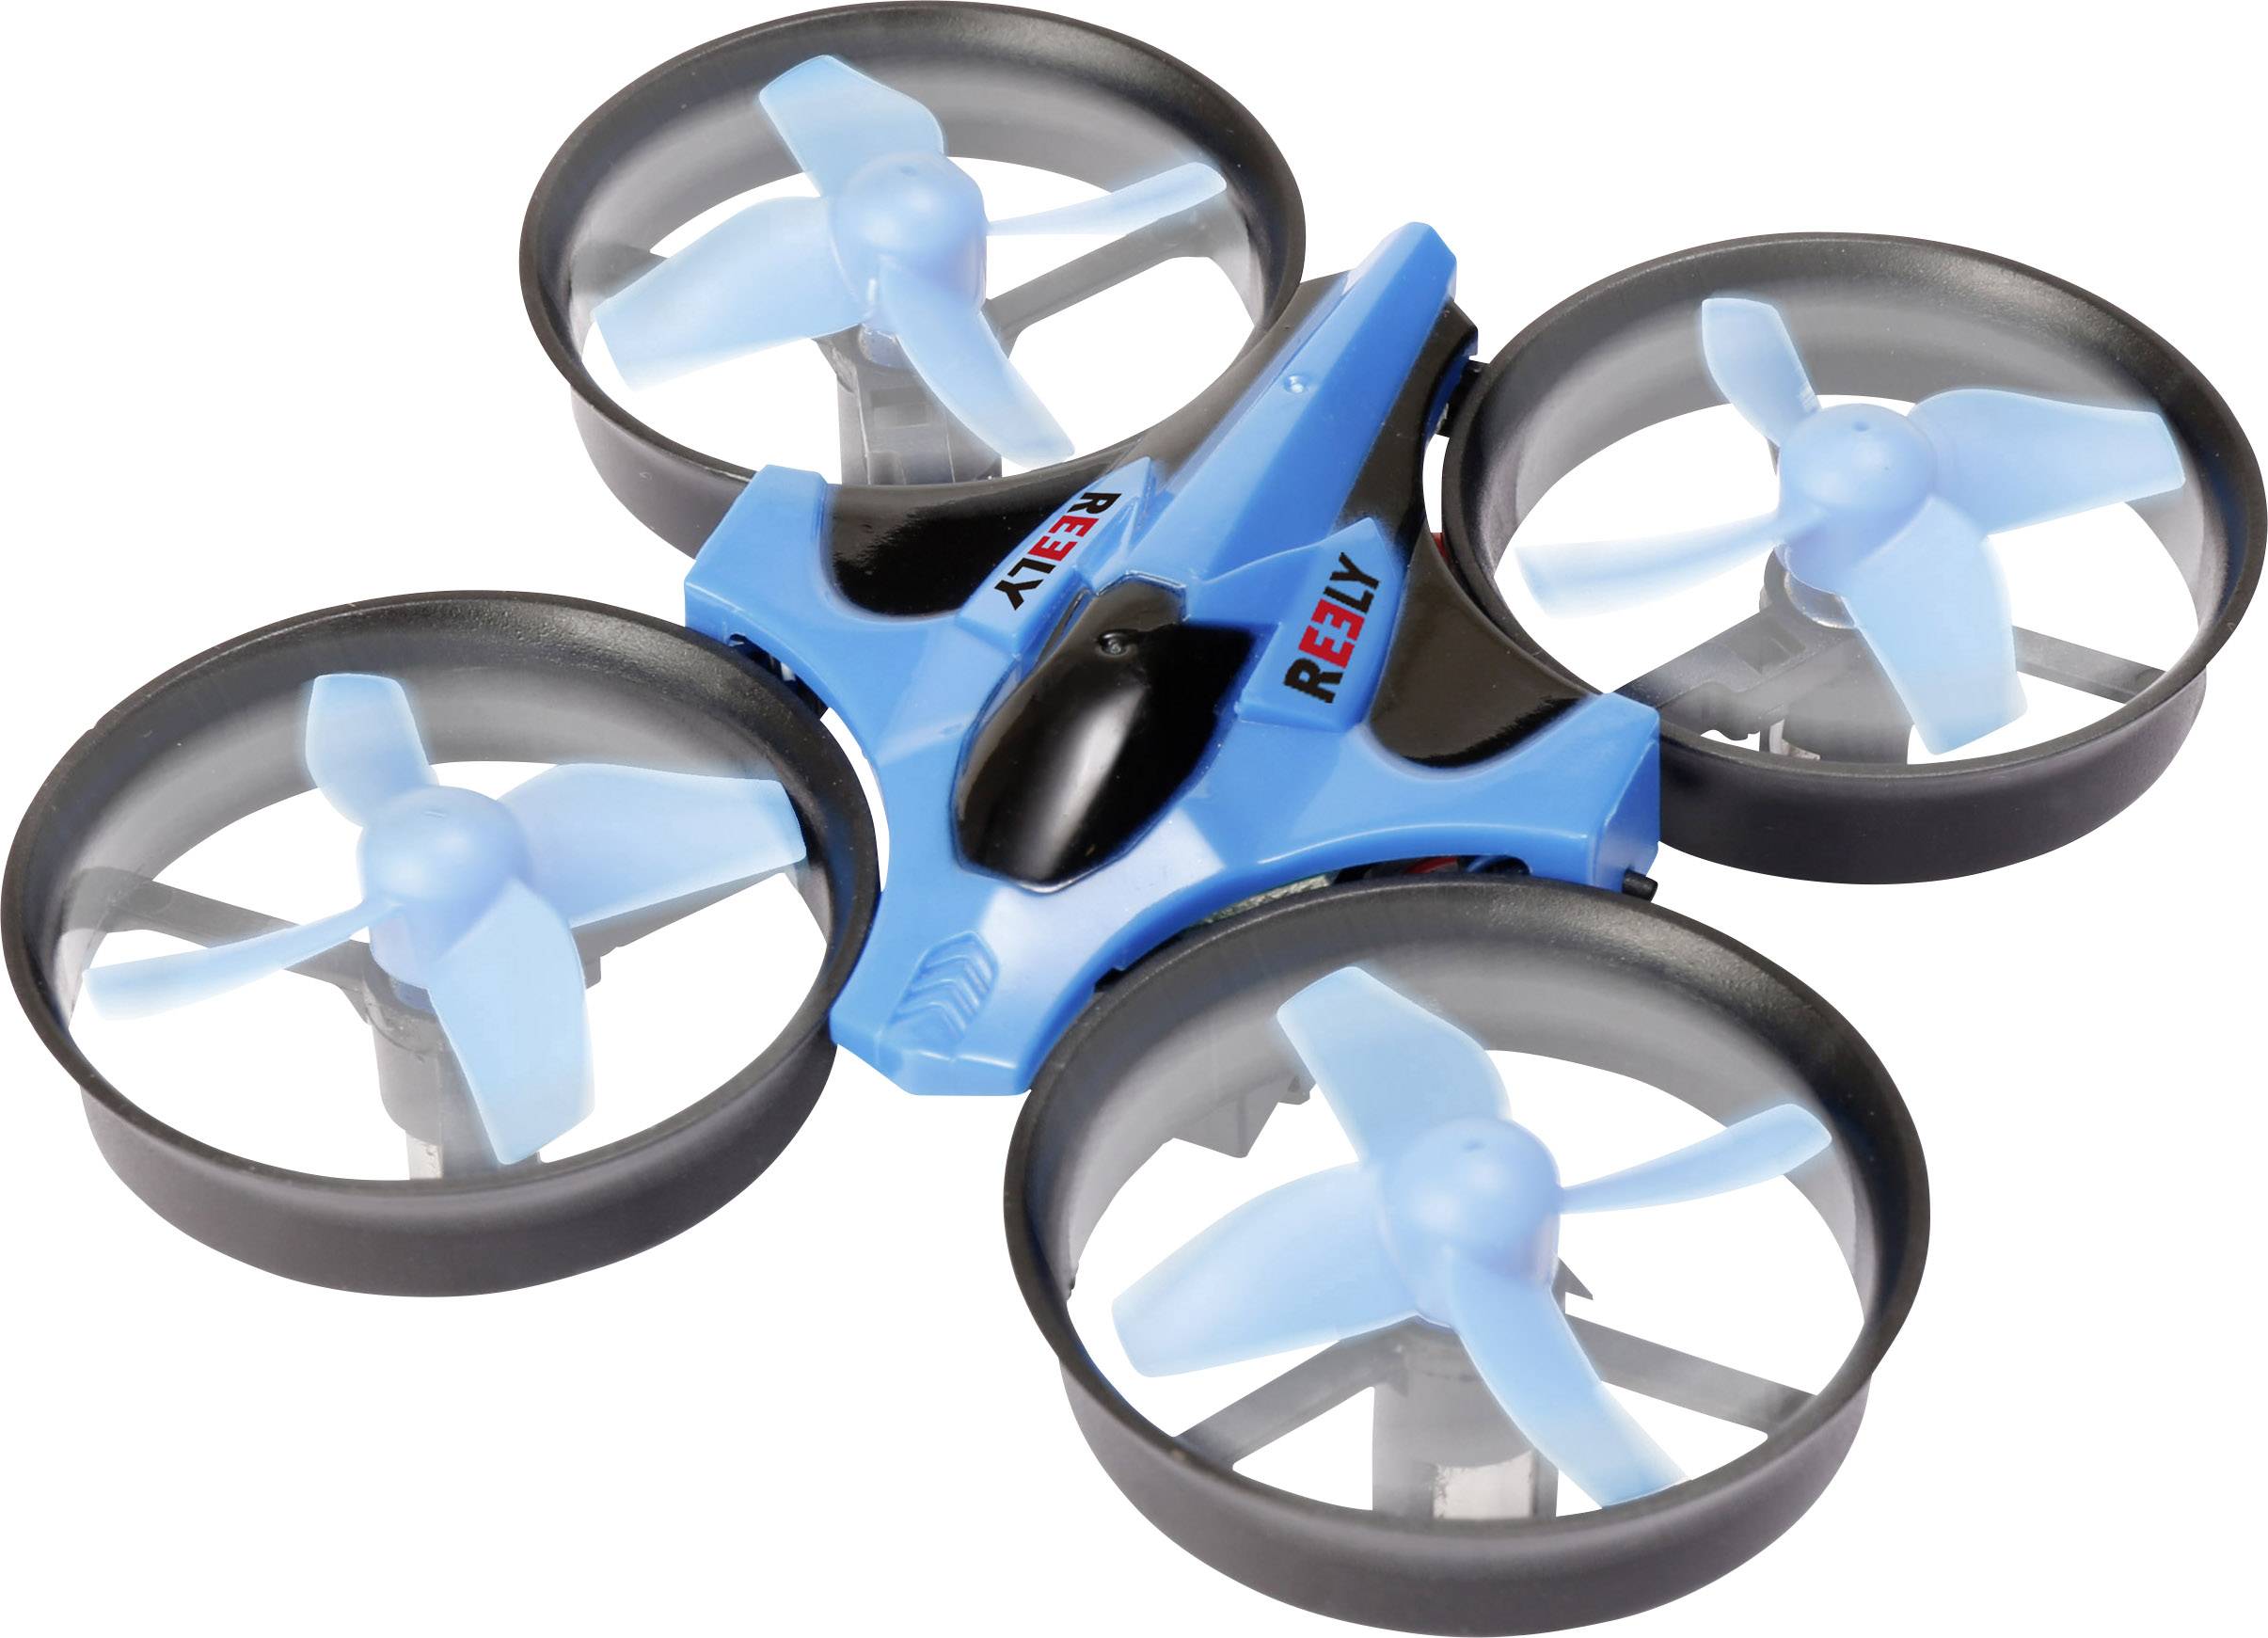 Reely Micro Racing Drone Race drone RTF Flip-functie, Headless-Mode